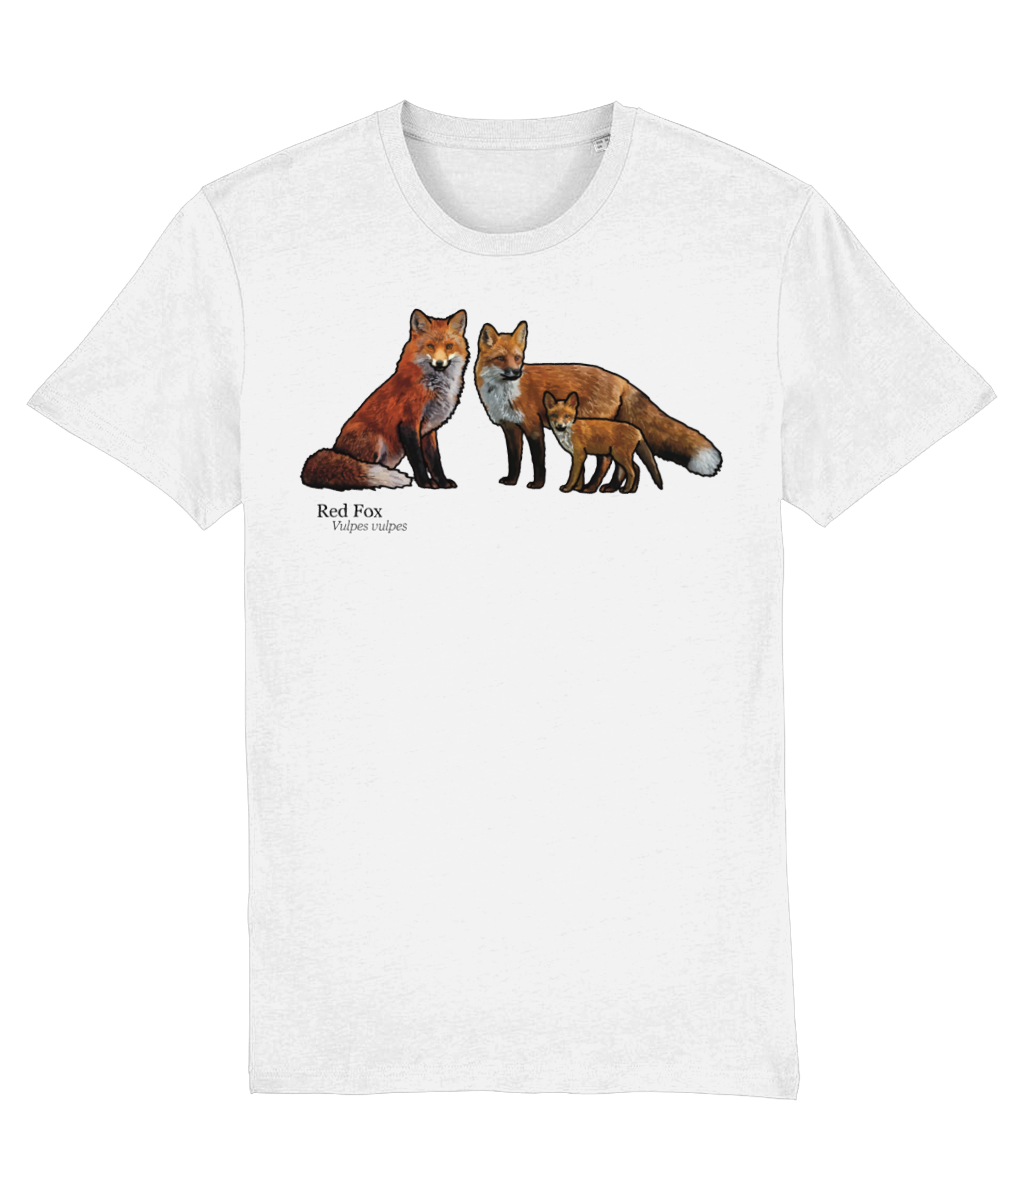 Red Fox Charity T-Shirt